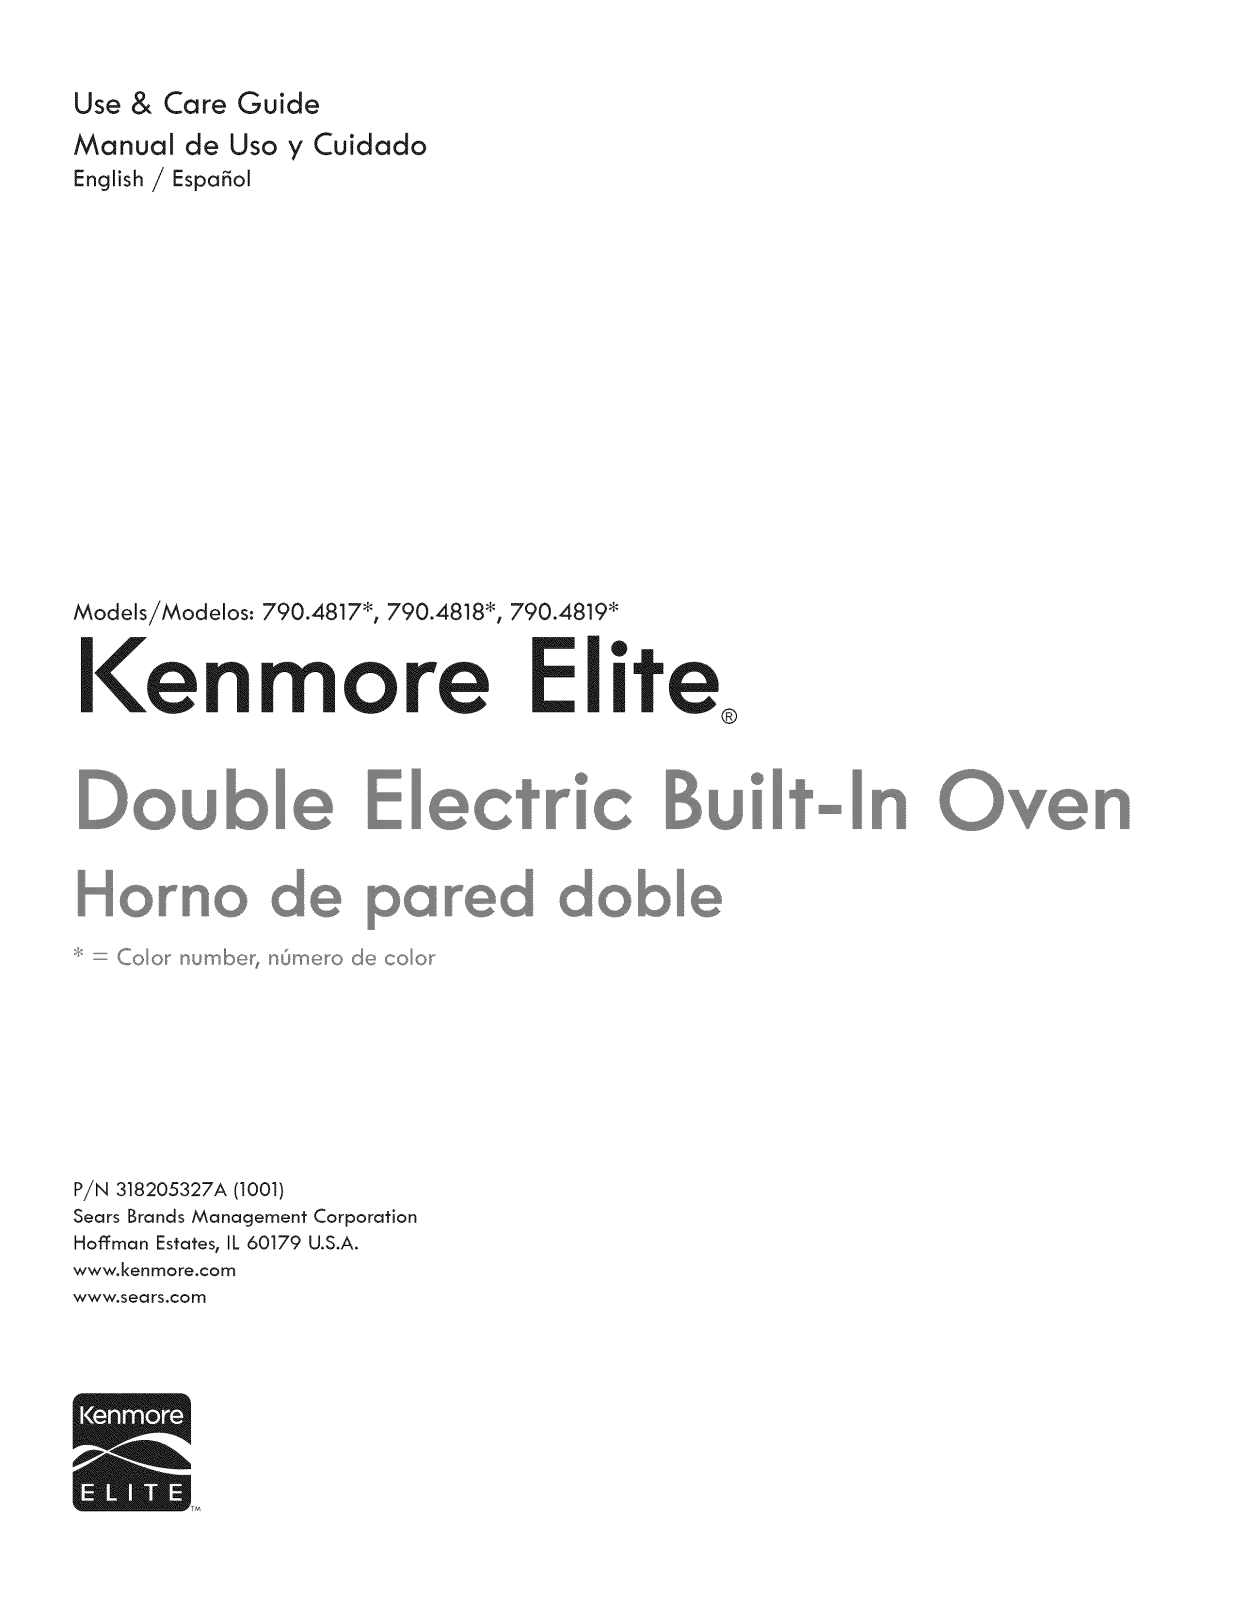 Kenmore Elite 79048179000, 79048193000, 79048189002, 79048189001, 79048189000 Owner’s Manual